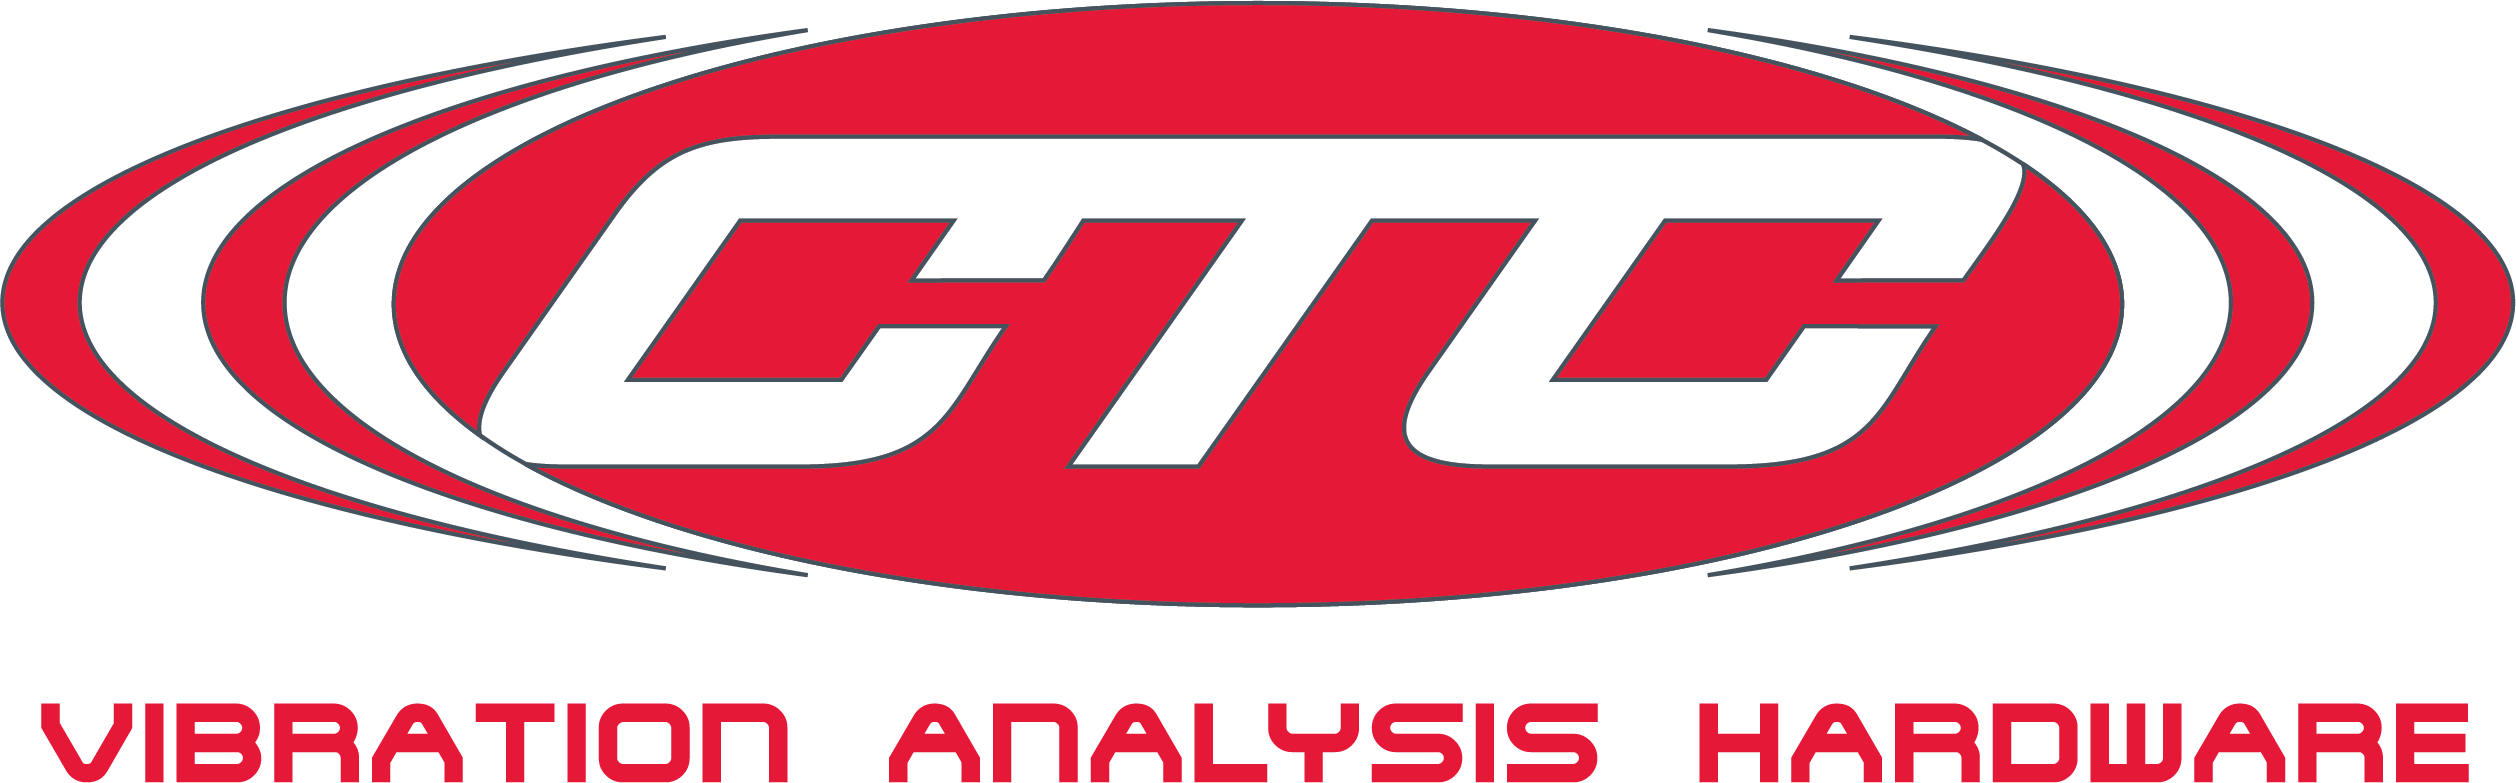 CTC product line logo